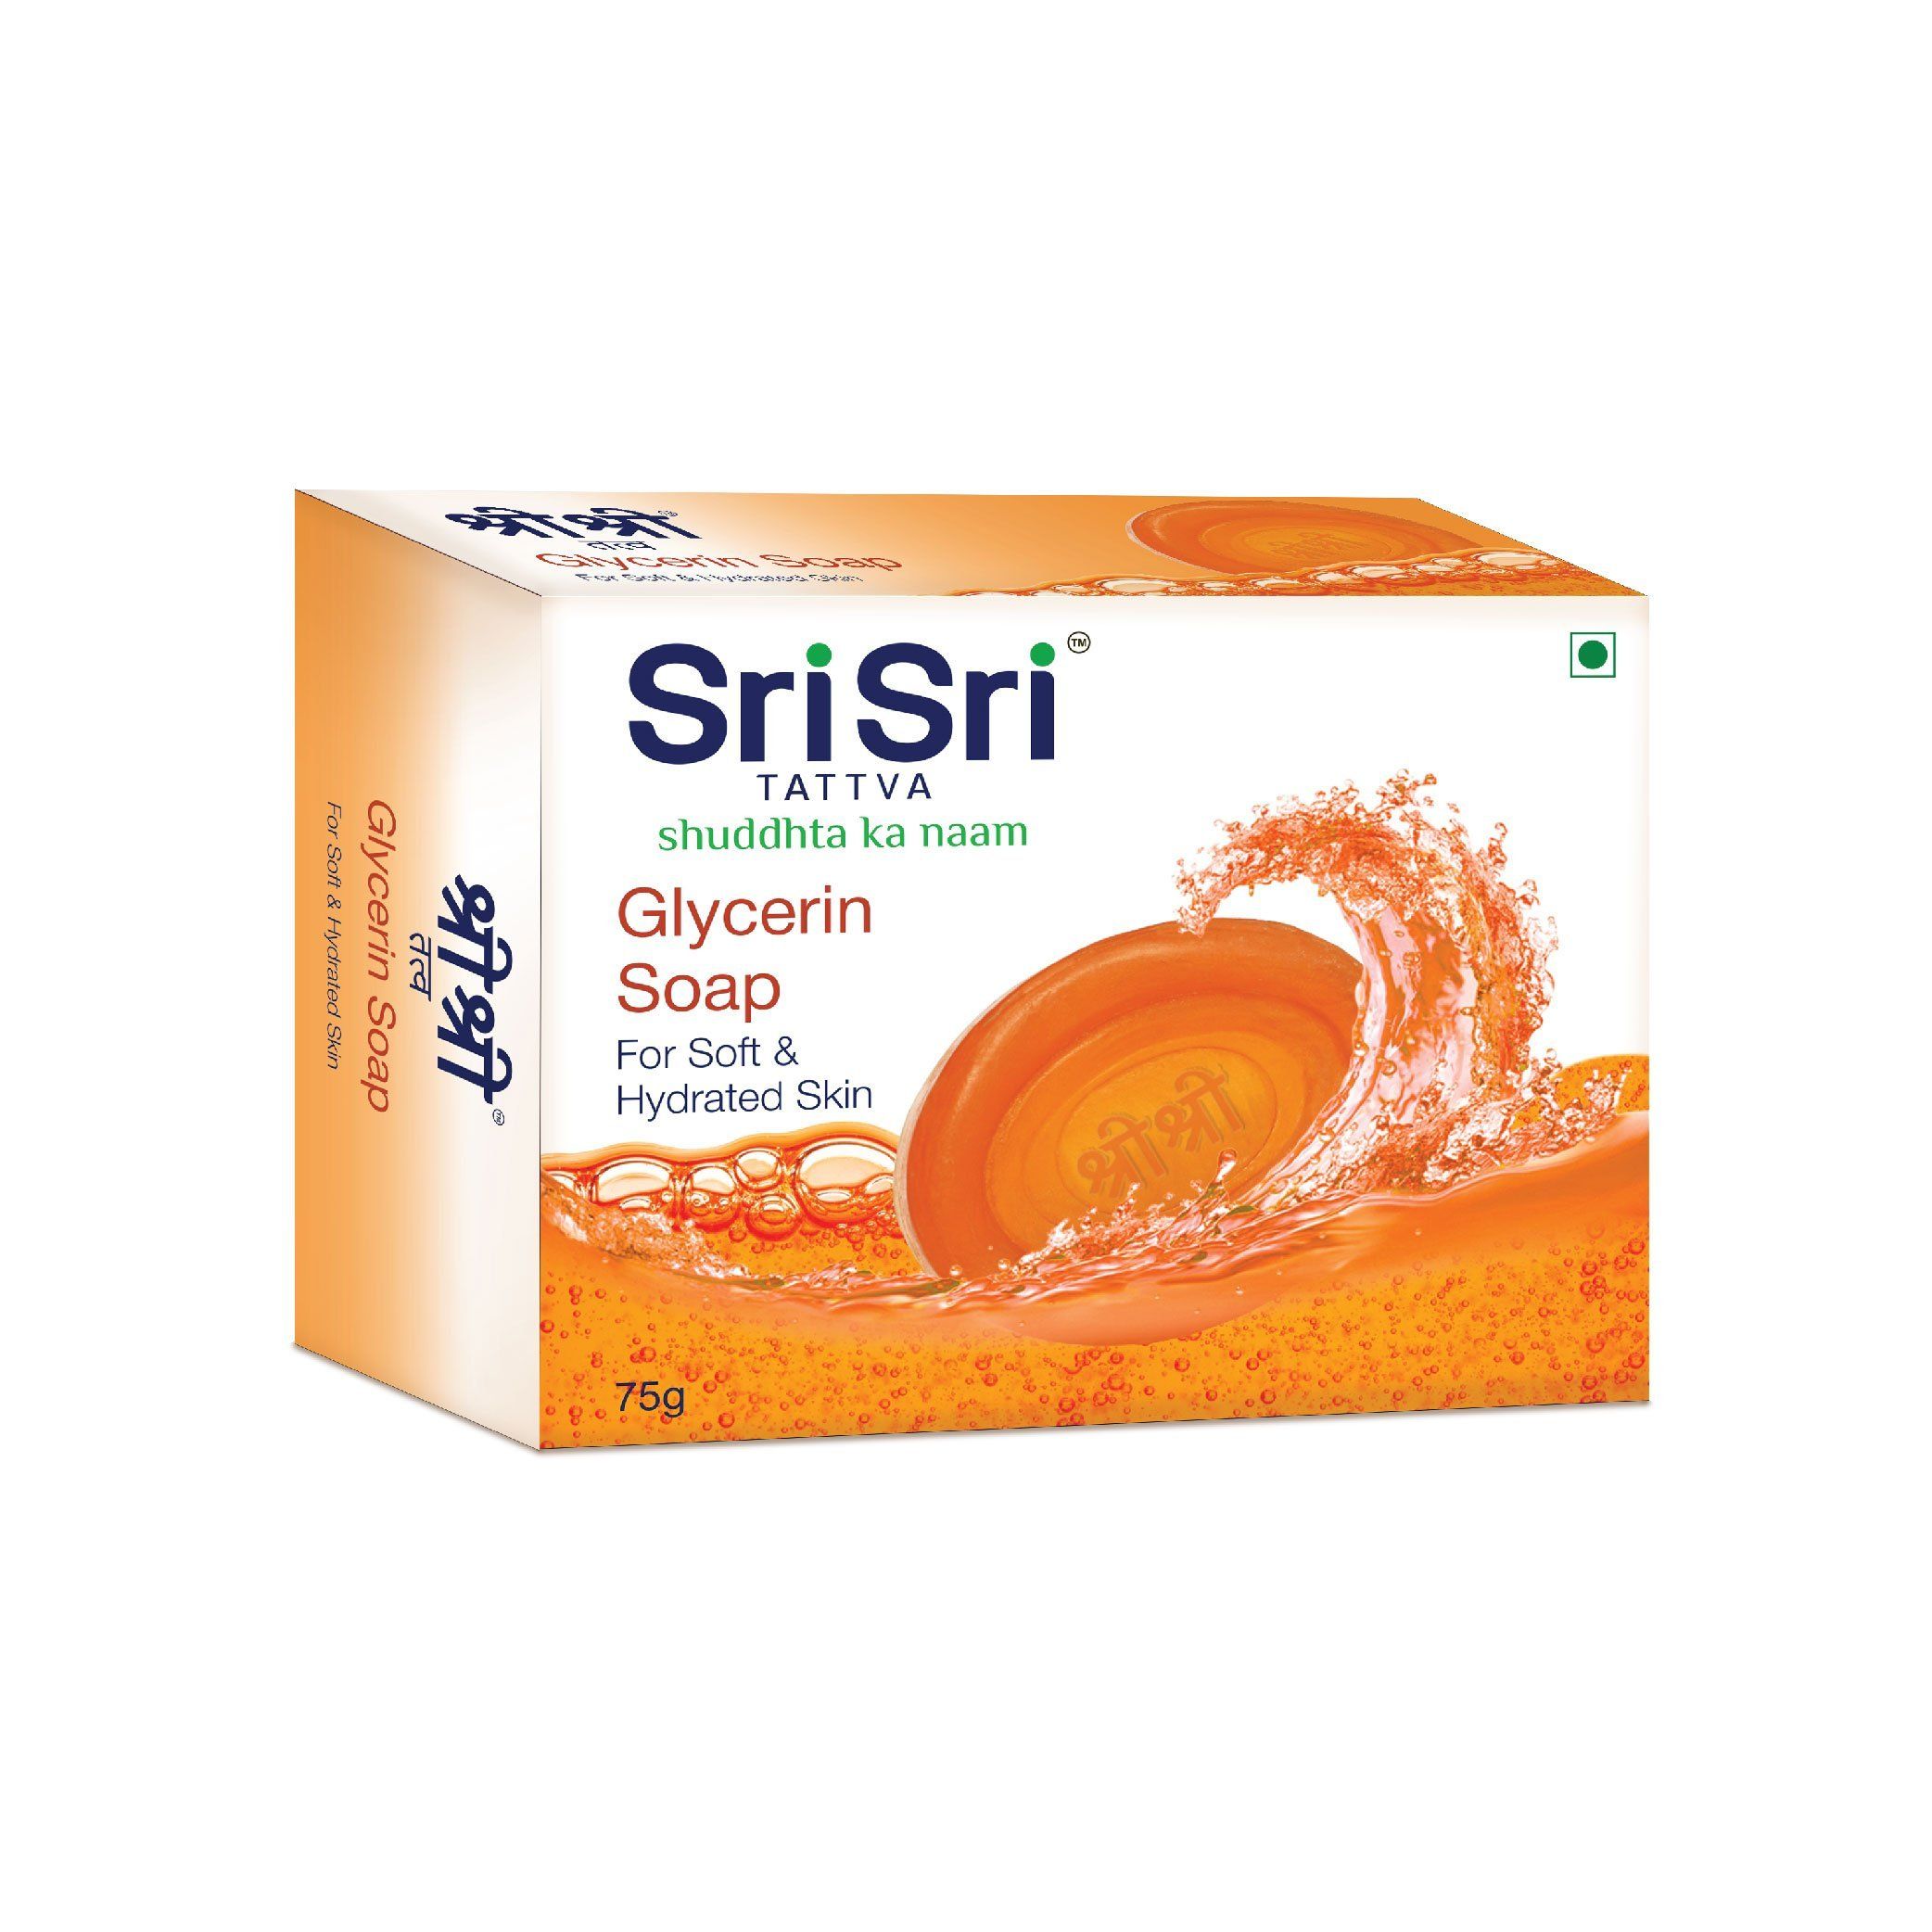 Glycerin Soap - For Soft & Hydrated Skin, 75g - Sri Sri Tattva